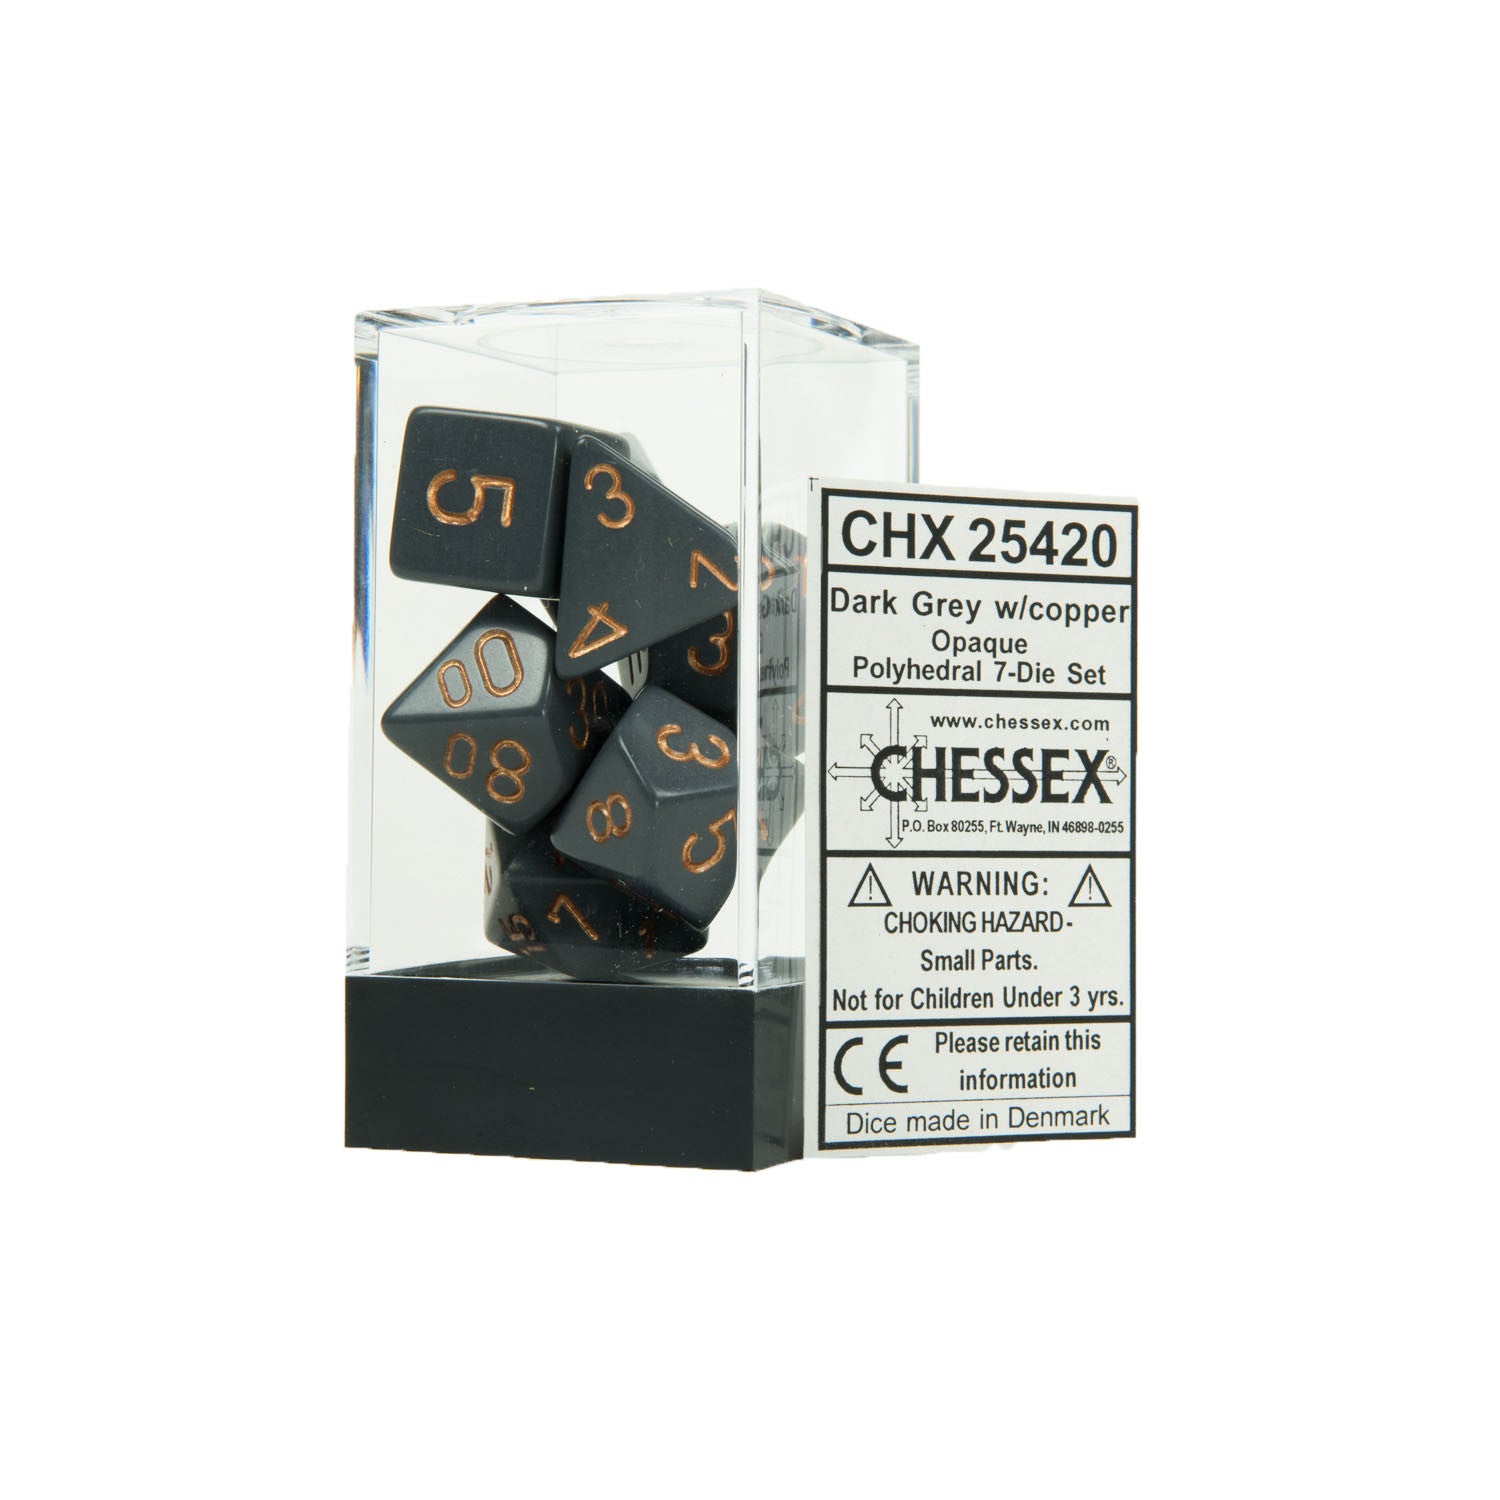 Chessex CHX25420 Opaque Dark Grey w/copper Polyhedral Dice Set